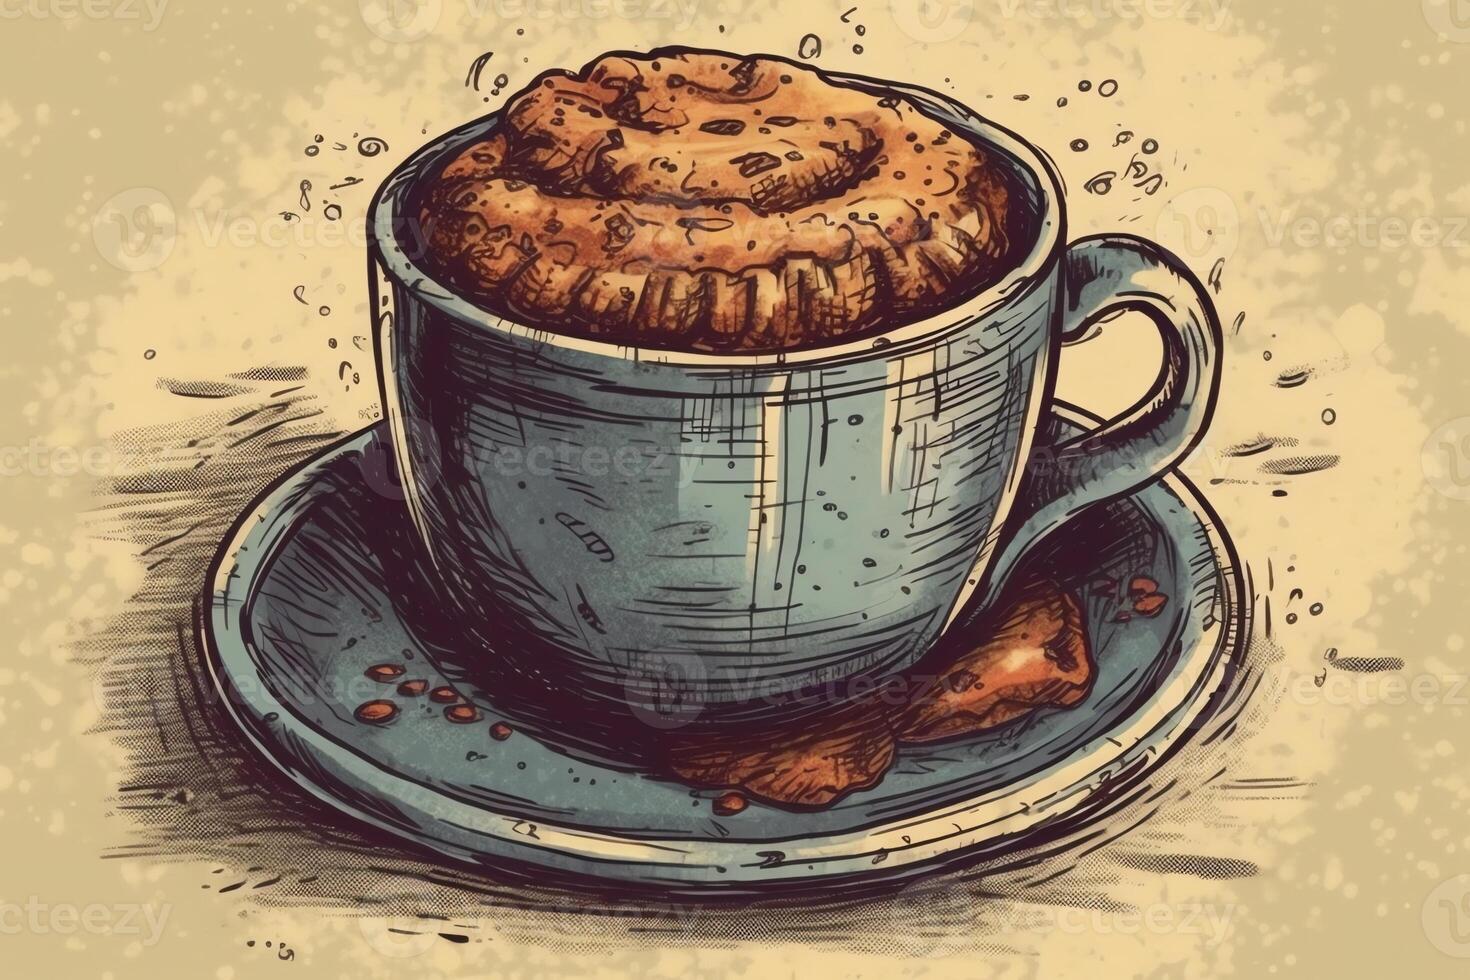 Coffee mug hand drawn illustration. photo